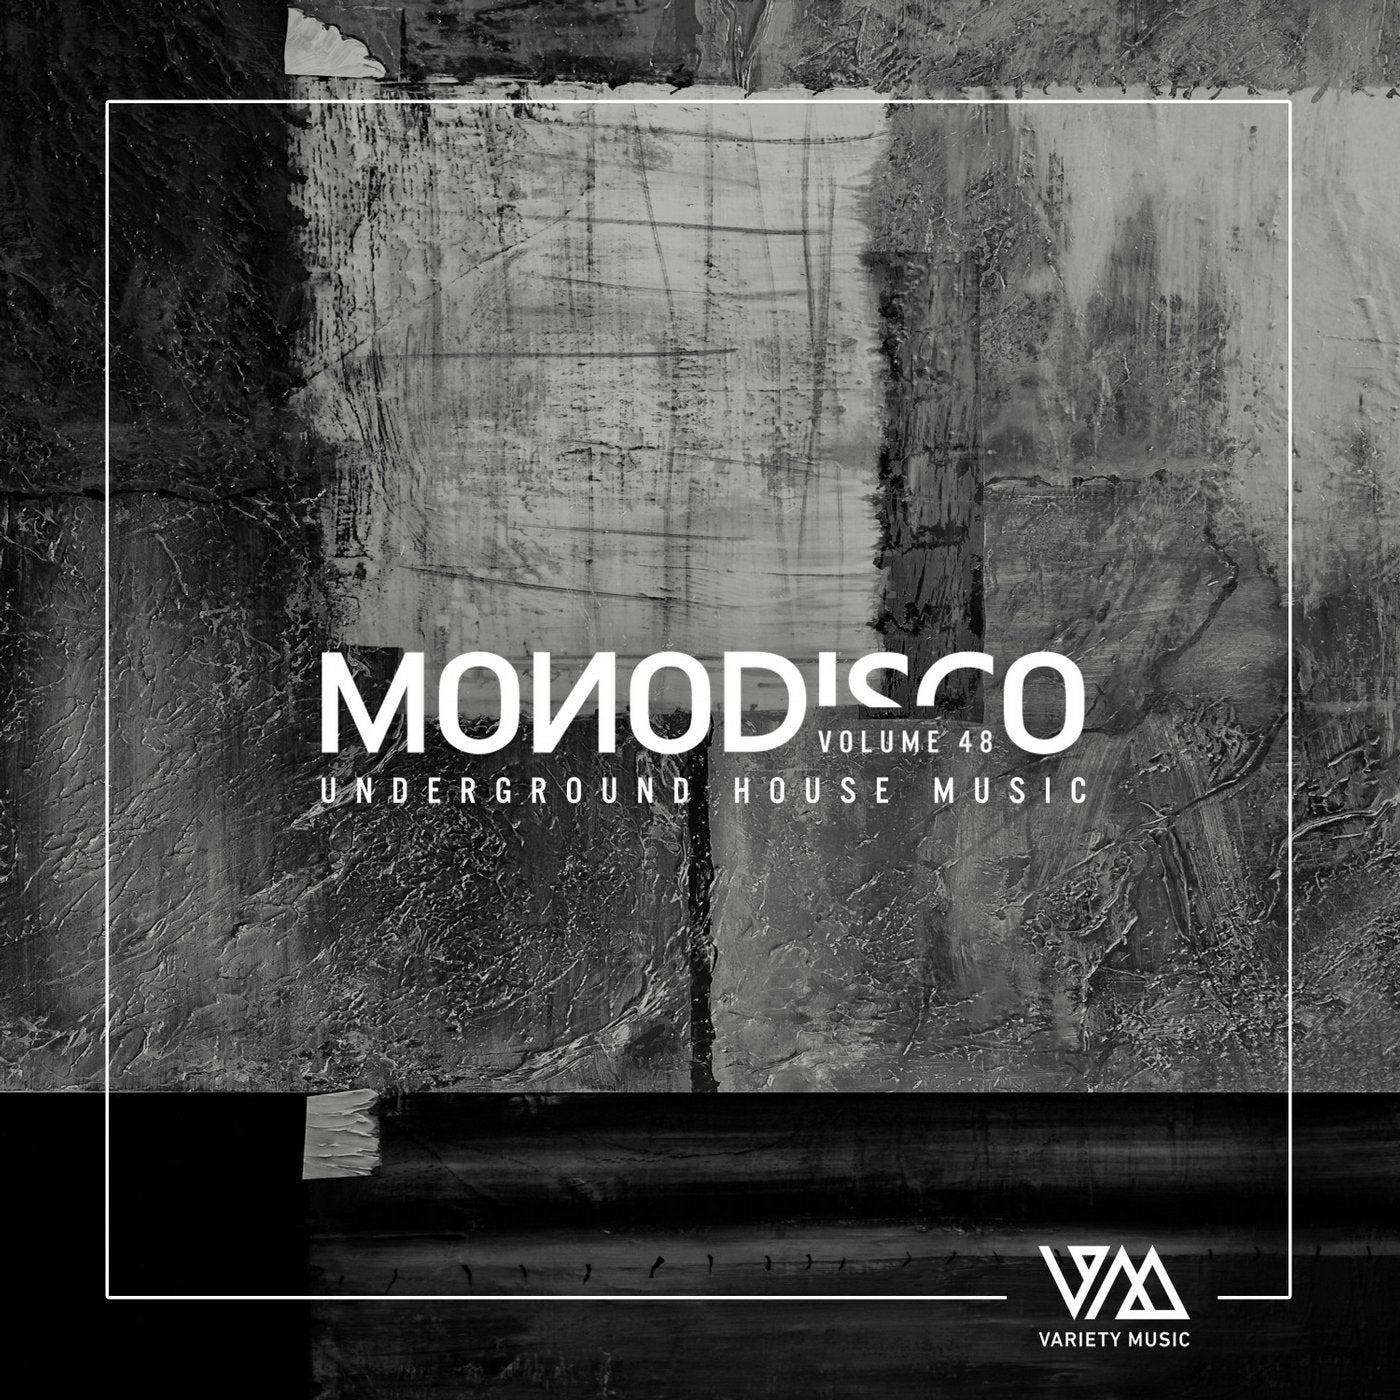 Monodisco Vol. 48